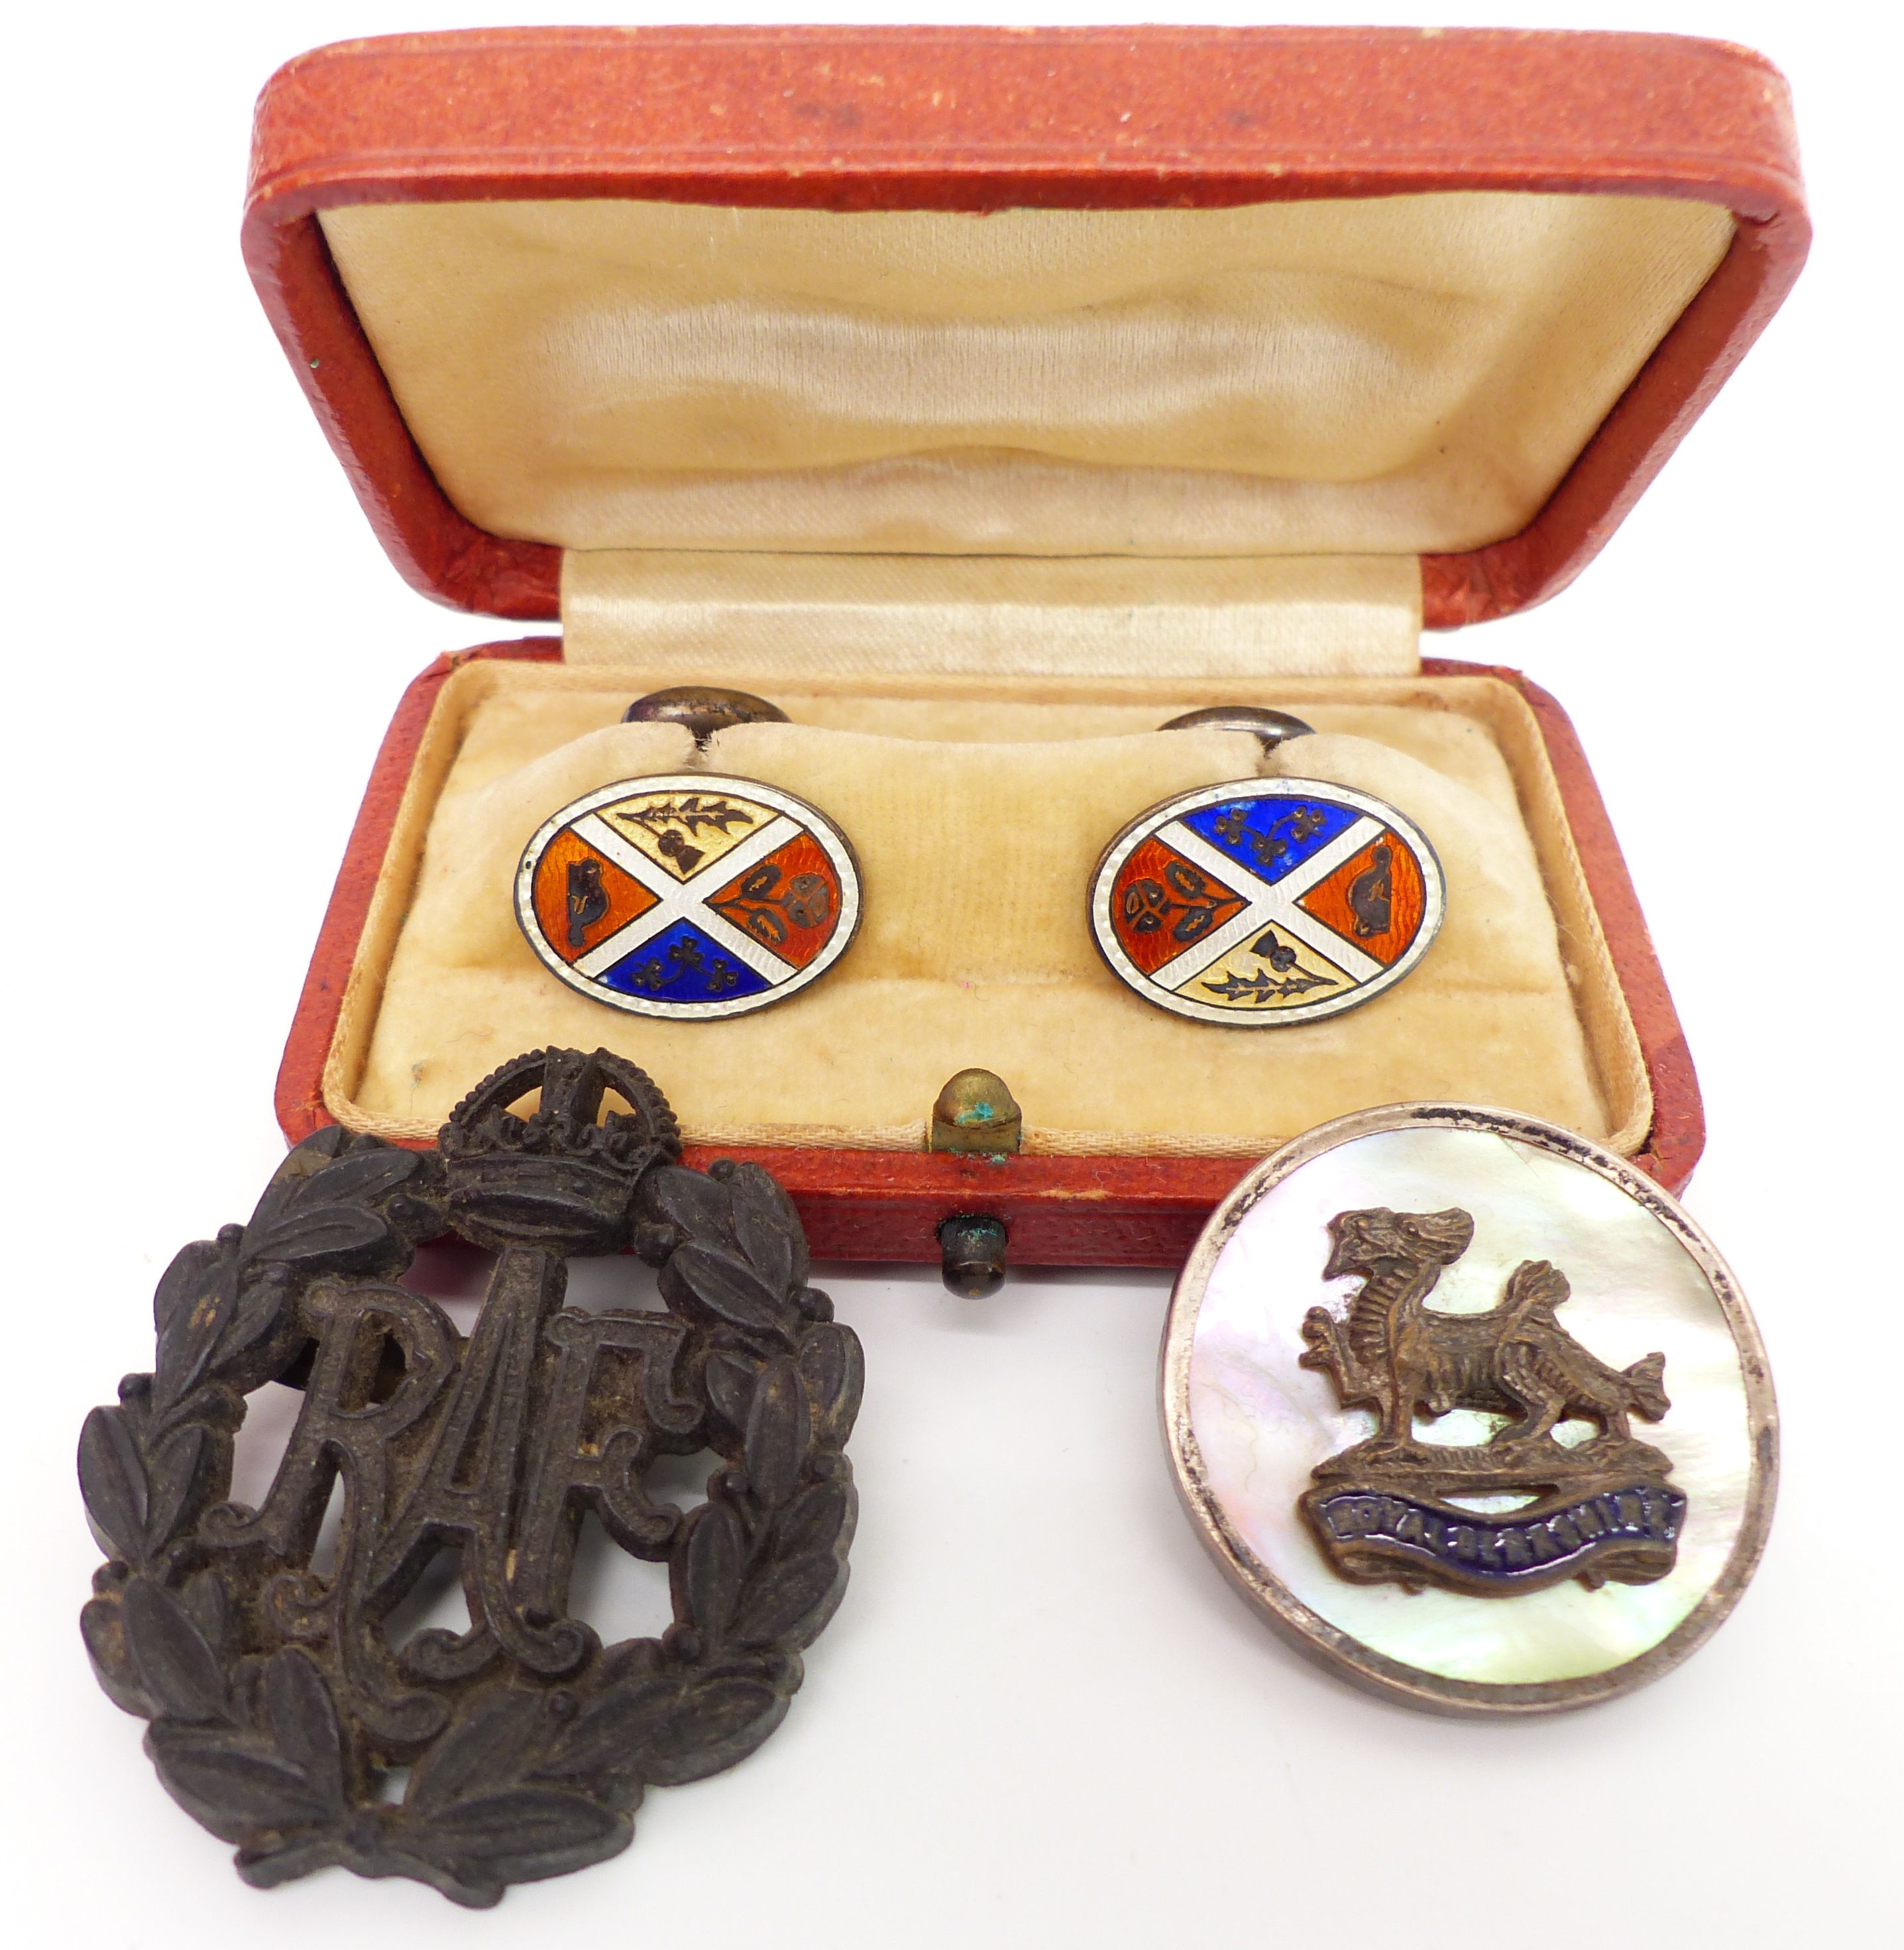 A pair of silver cufflinks set with enamel, an RAF brooch, and an RAF badge